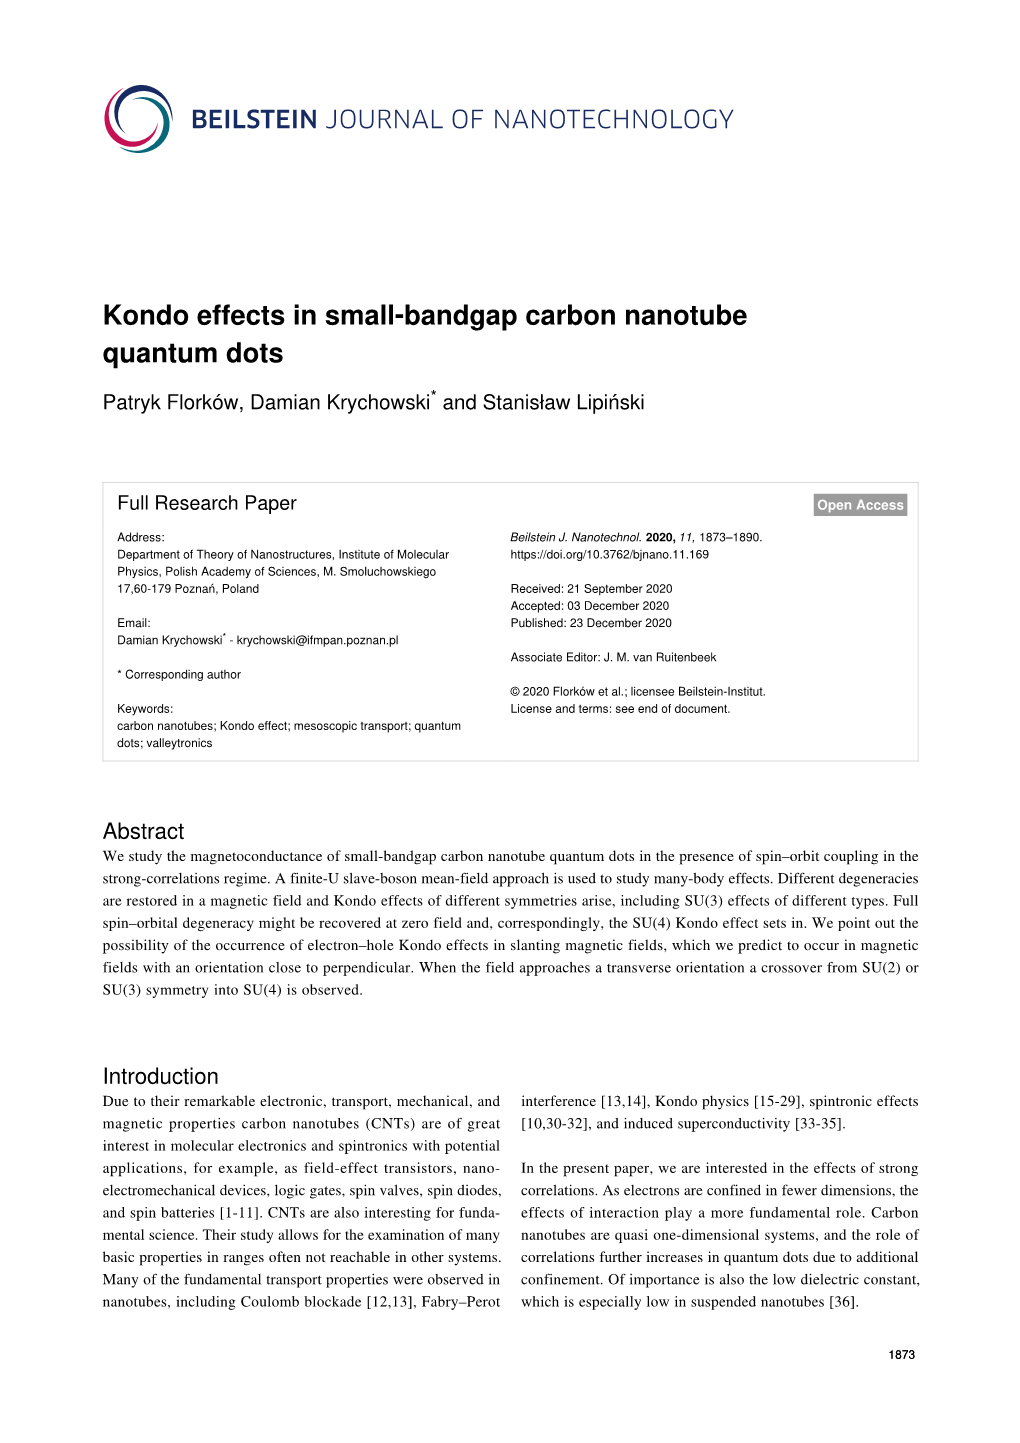 Kondo Effects in Small-Bandgap Carbon Nanotube Quantum Dots